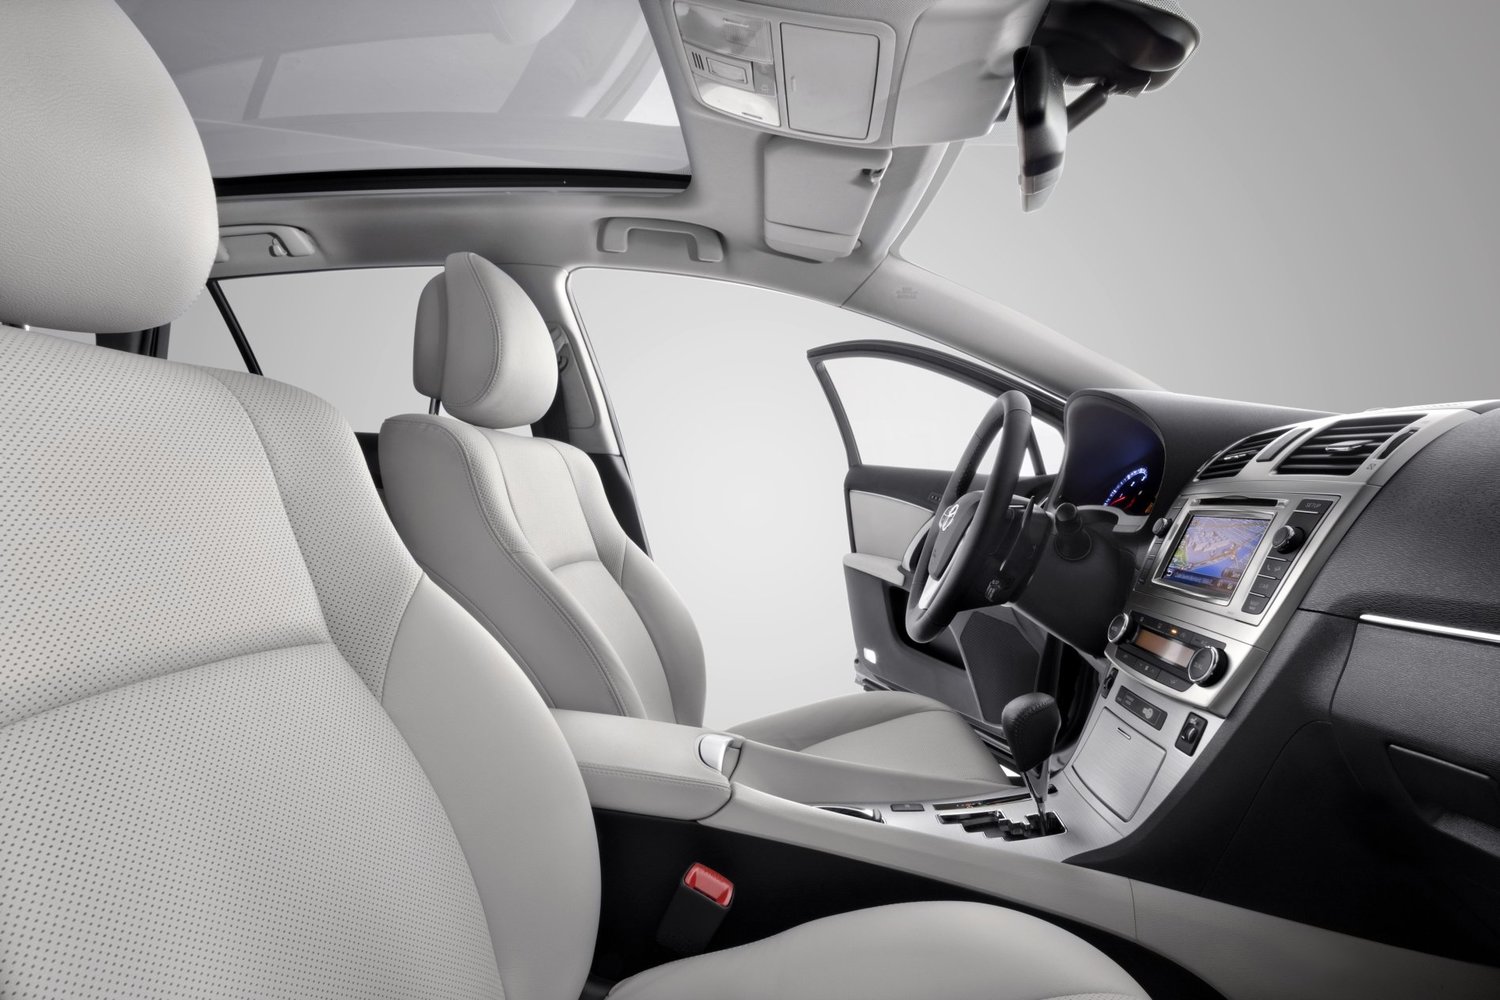 седан Toyota Avensis 2011 - 2015г выпуска модификация 1.6 MT (132 л.с.)